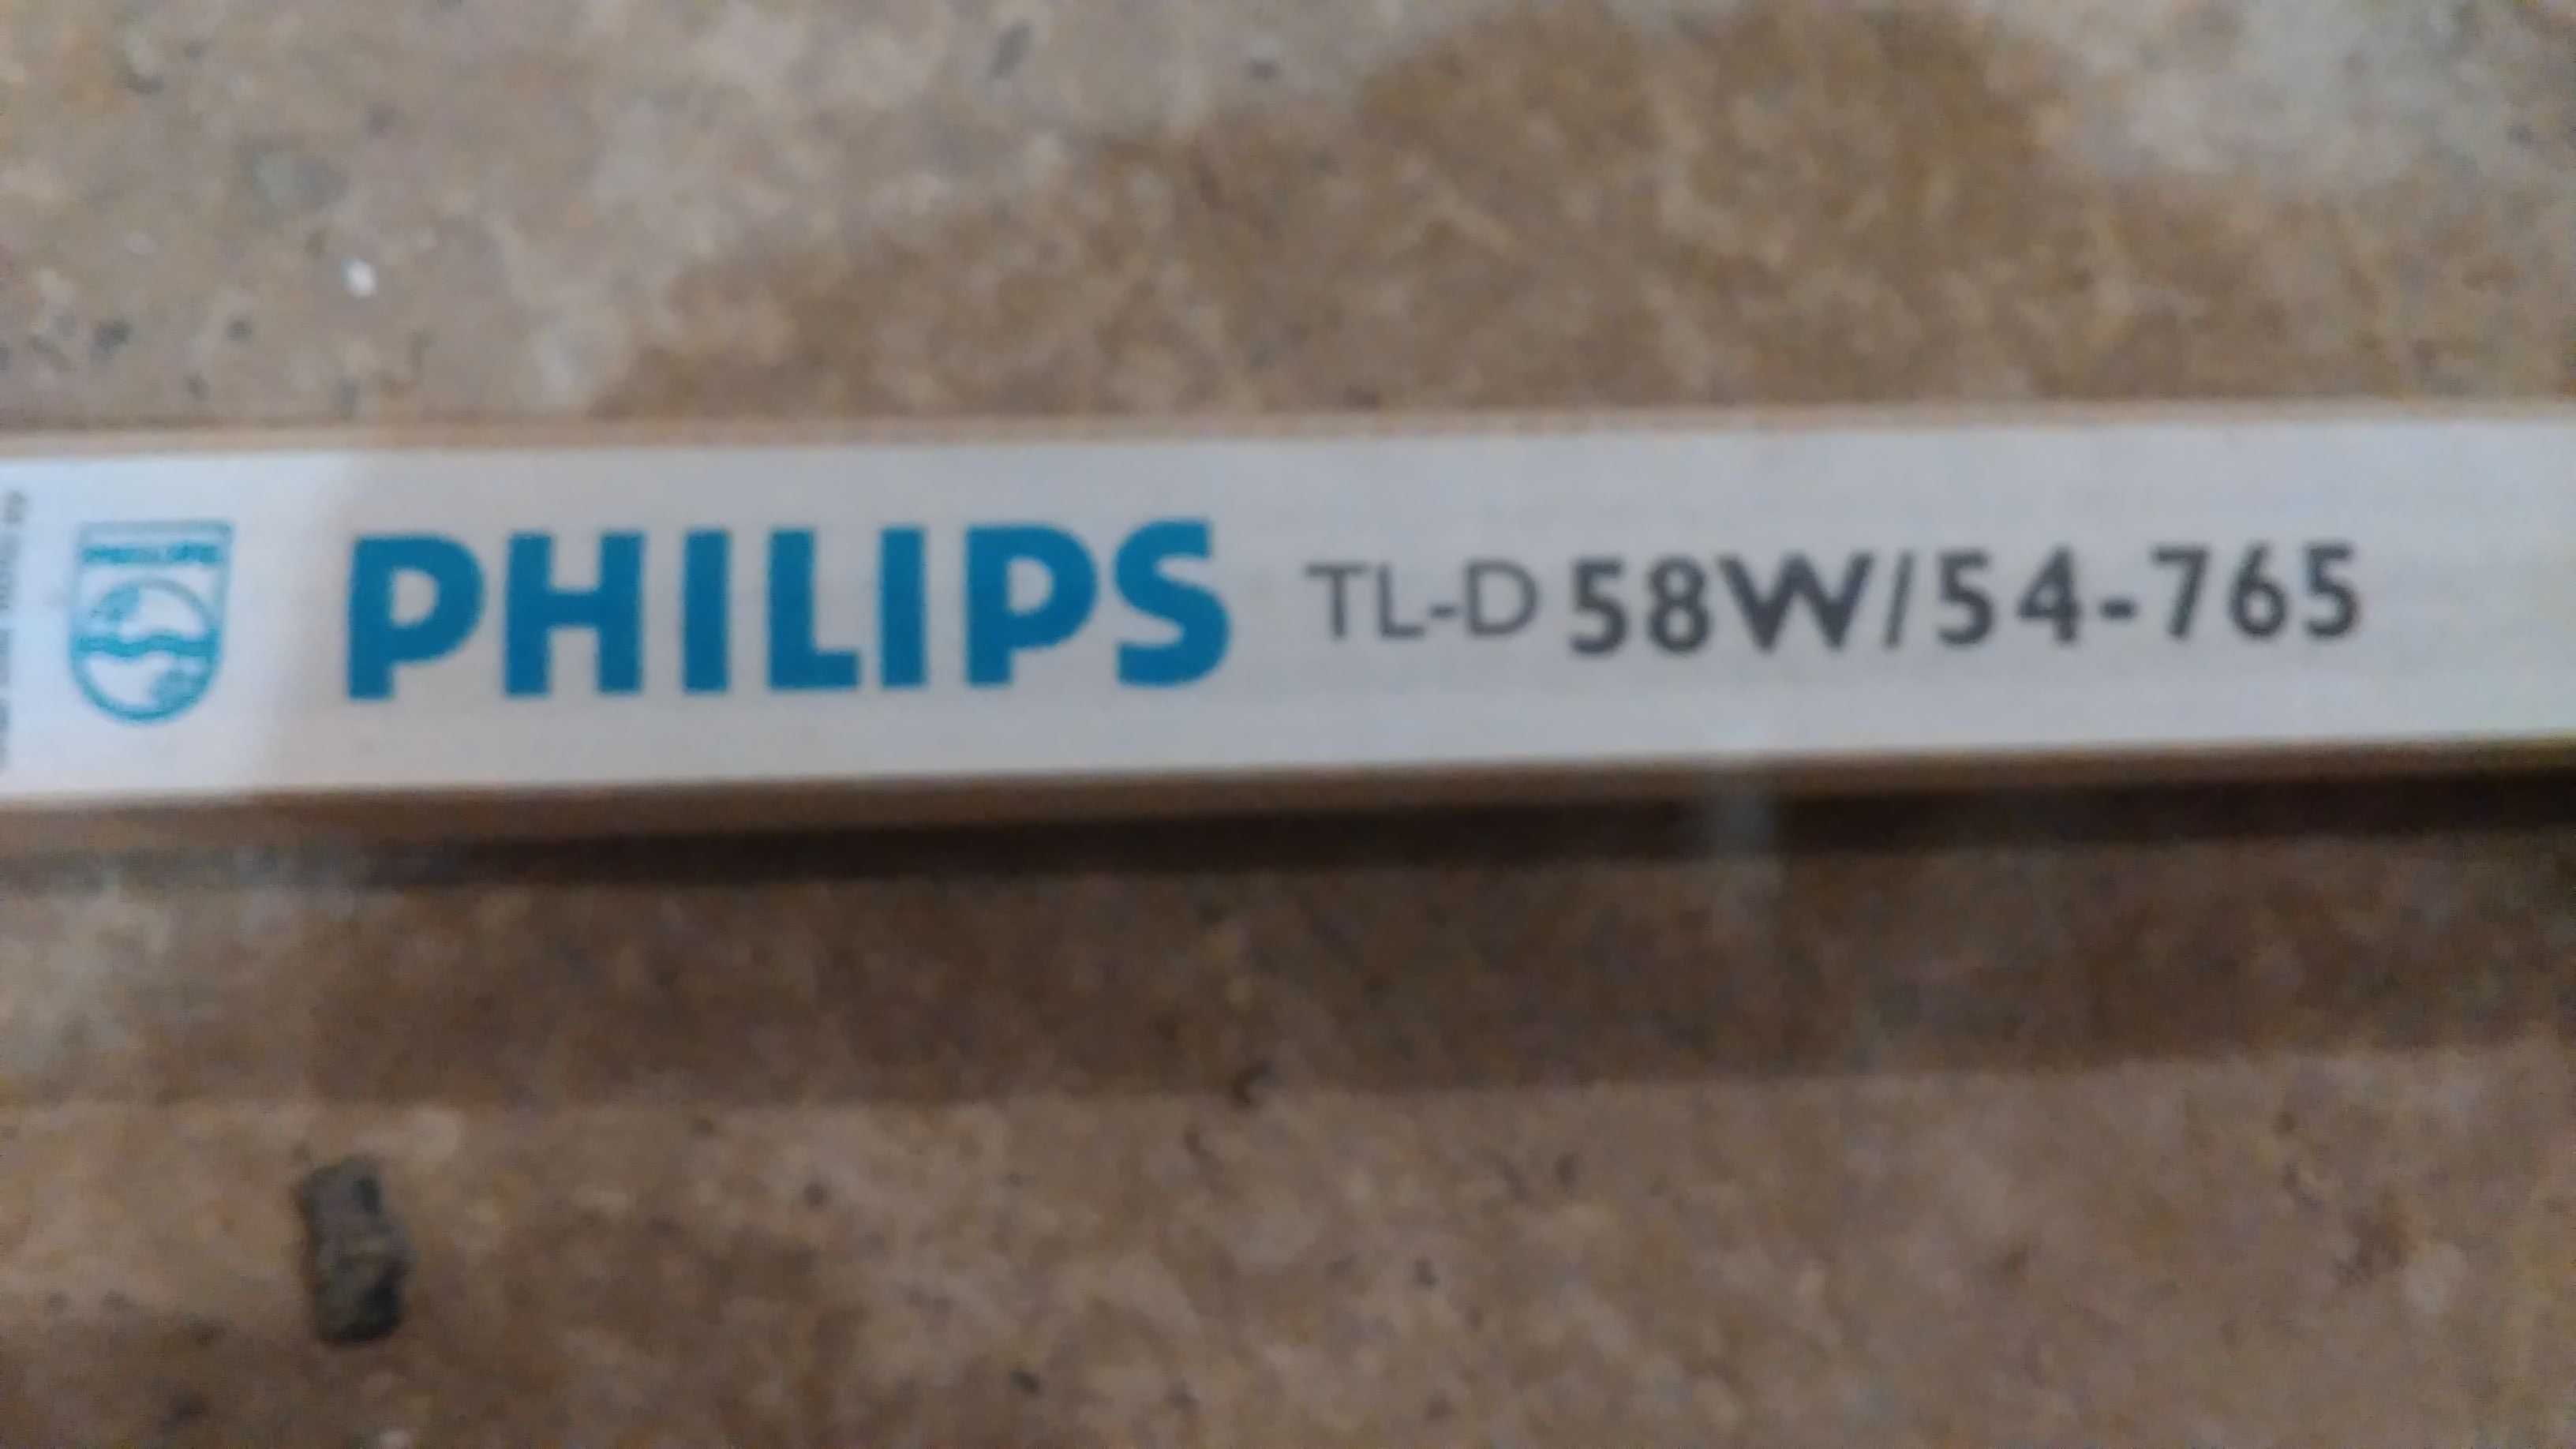 Люминесцентная лампа PHILIPS TL-D 58W/54-765 G13 T8 1500mm